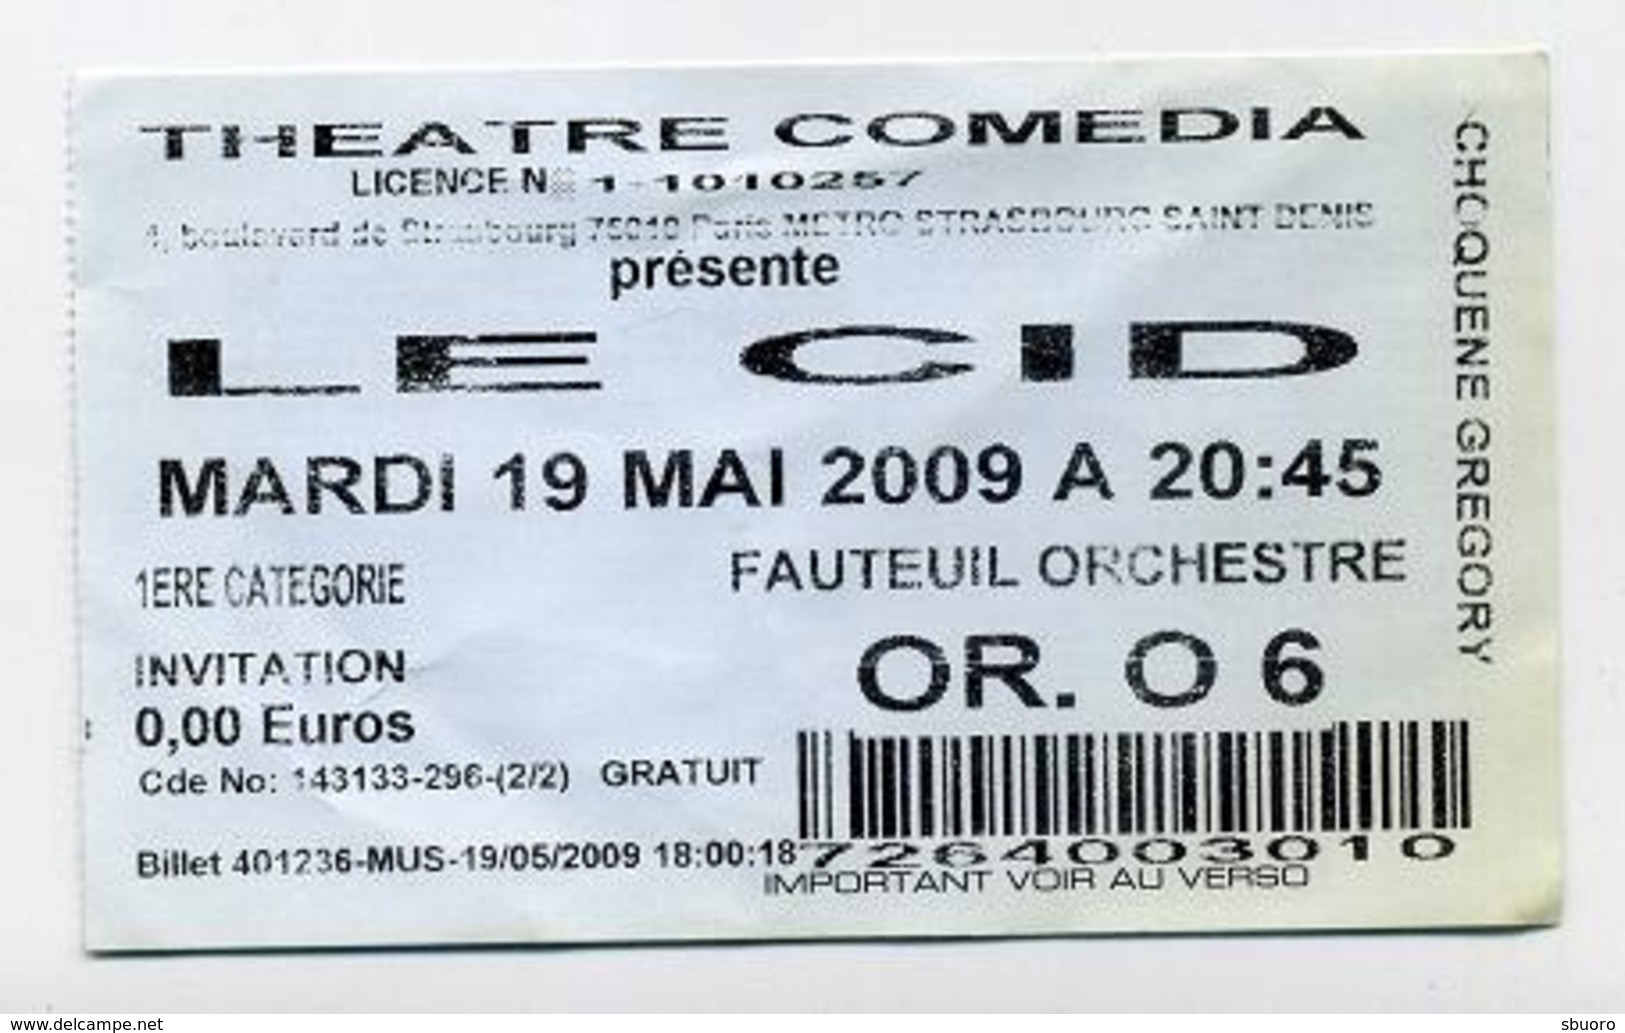 Le Cid - Théâtre Comedia, Paris - Mai 2009 - Biglietti D'ingresso